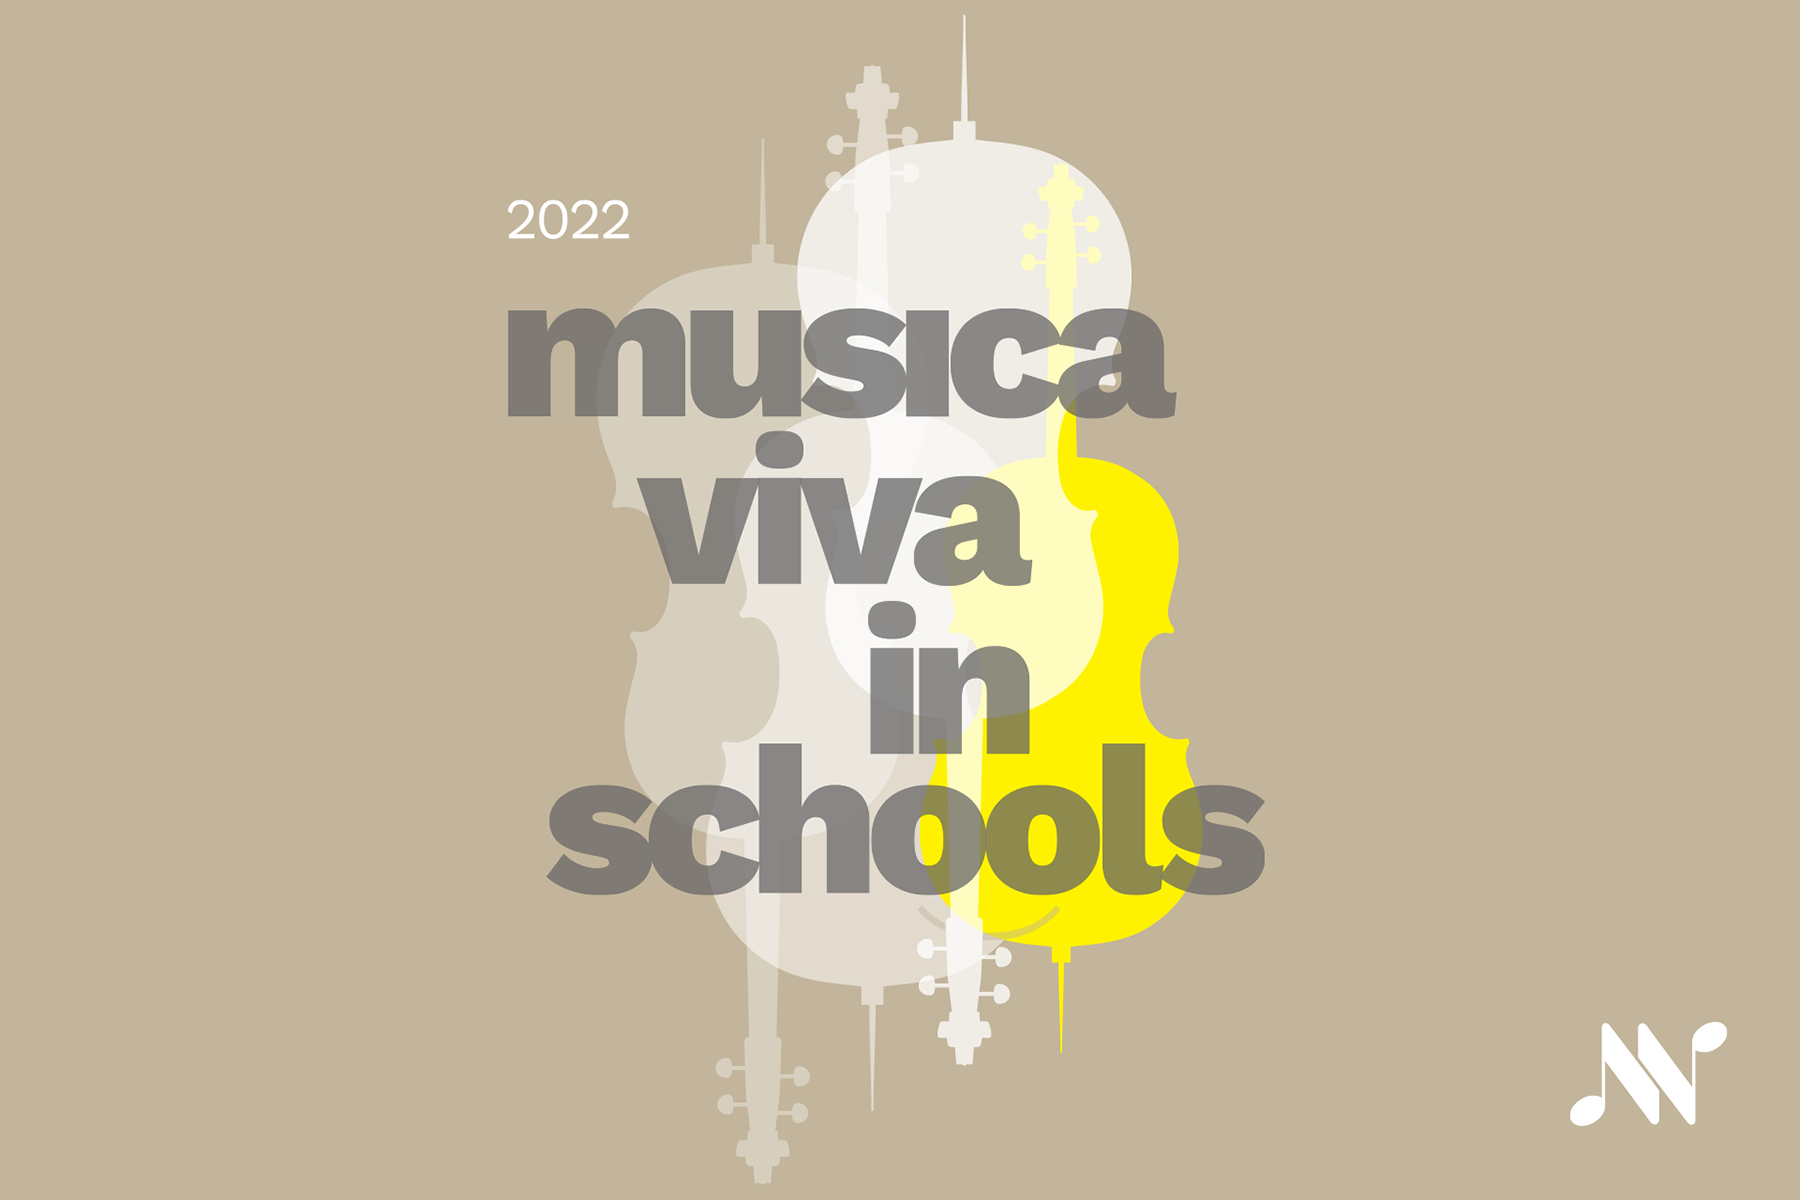 Musica Viva In Schools 2022 has Launched! — EducationHQ